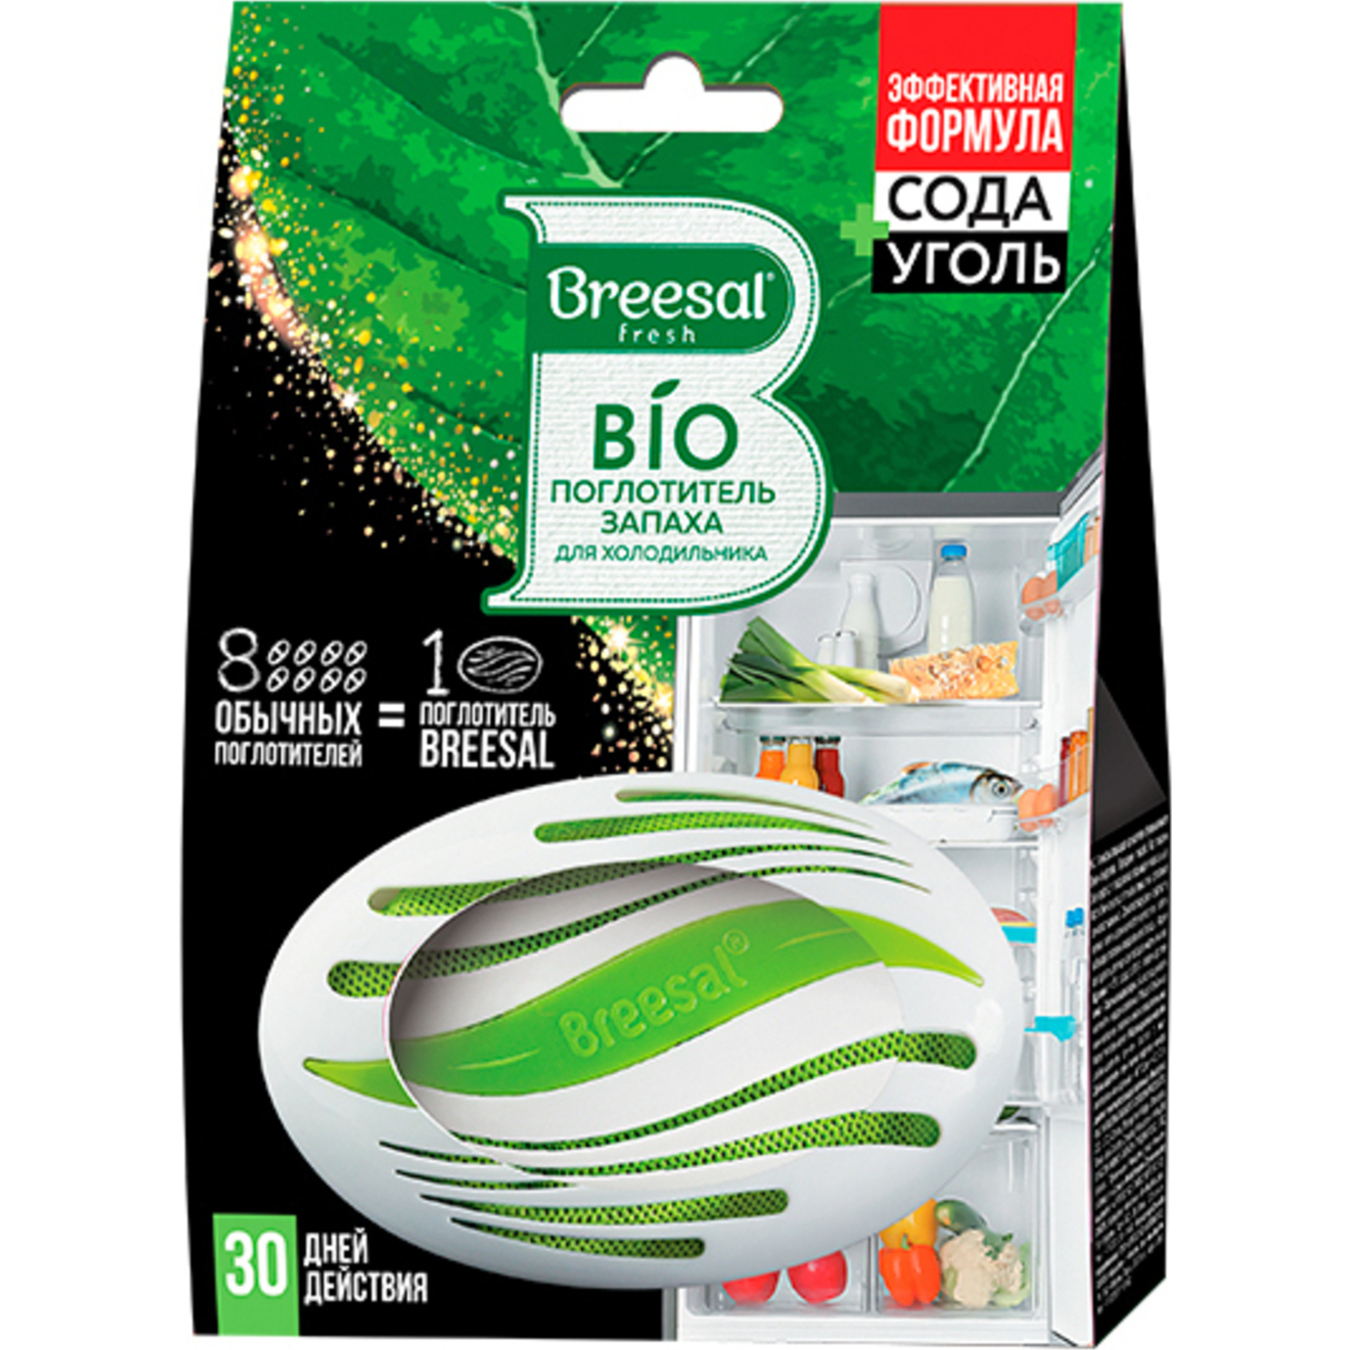 Breesal Bio-odor absorber for refrigerator 80g